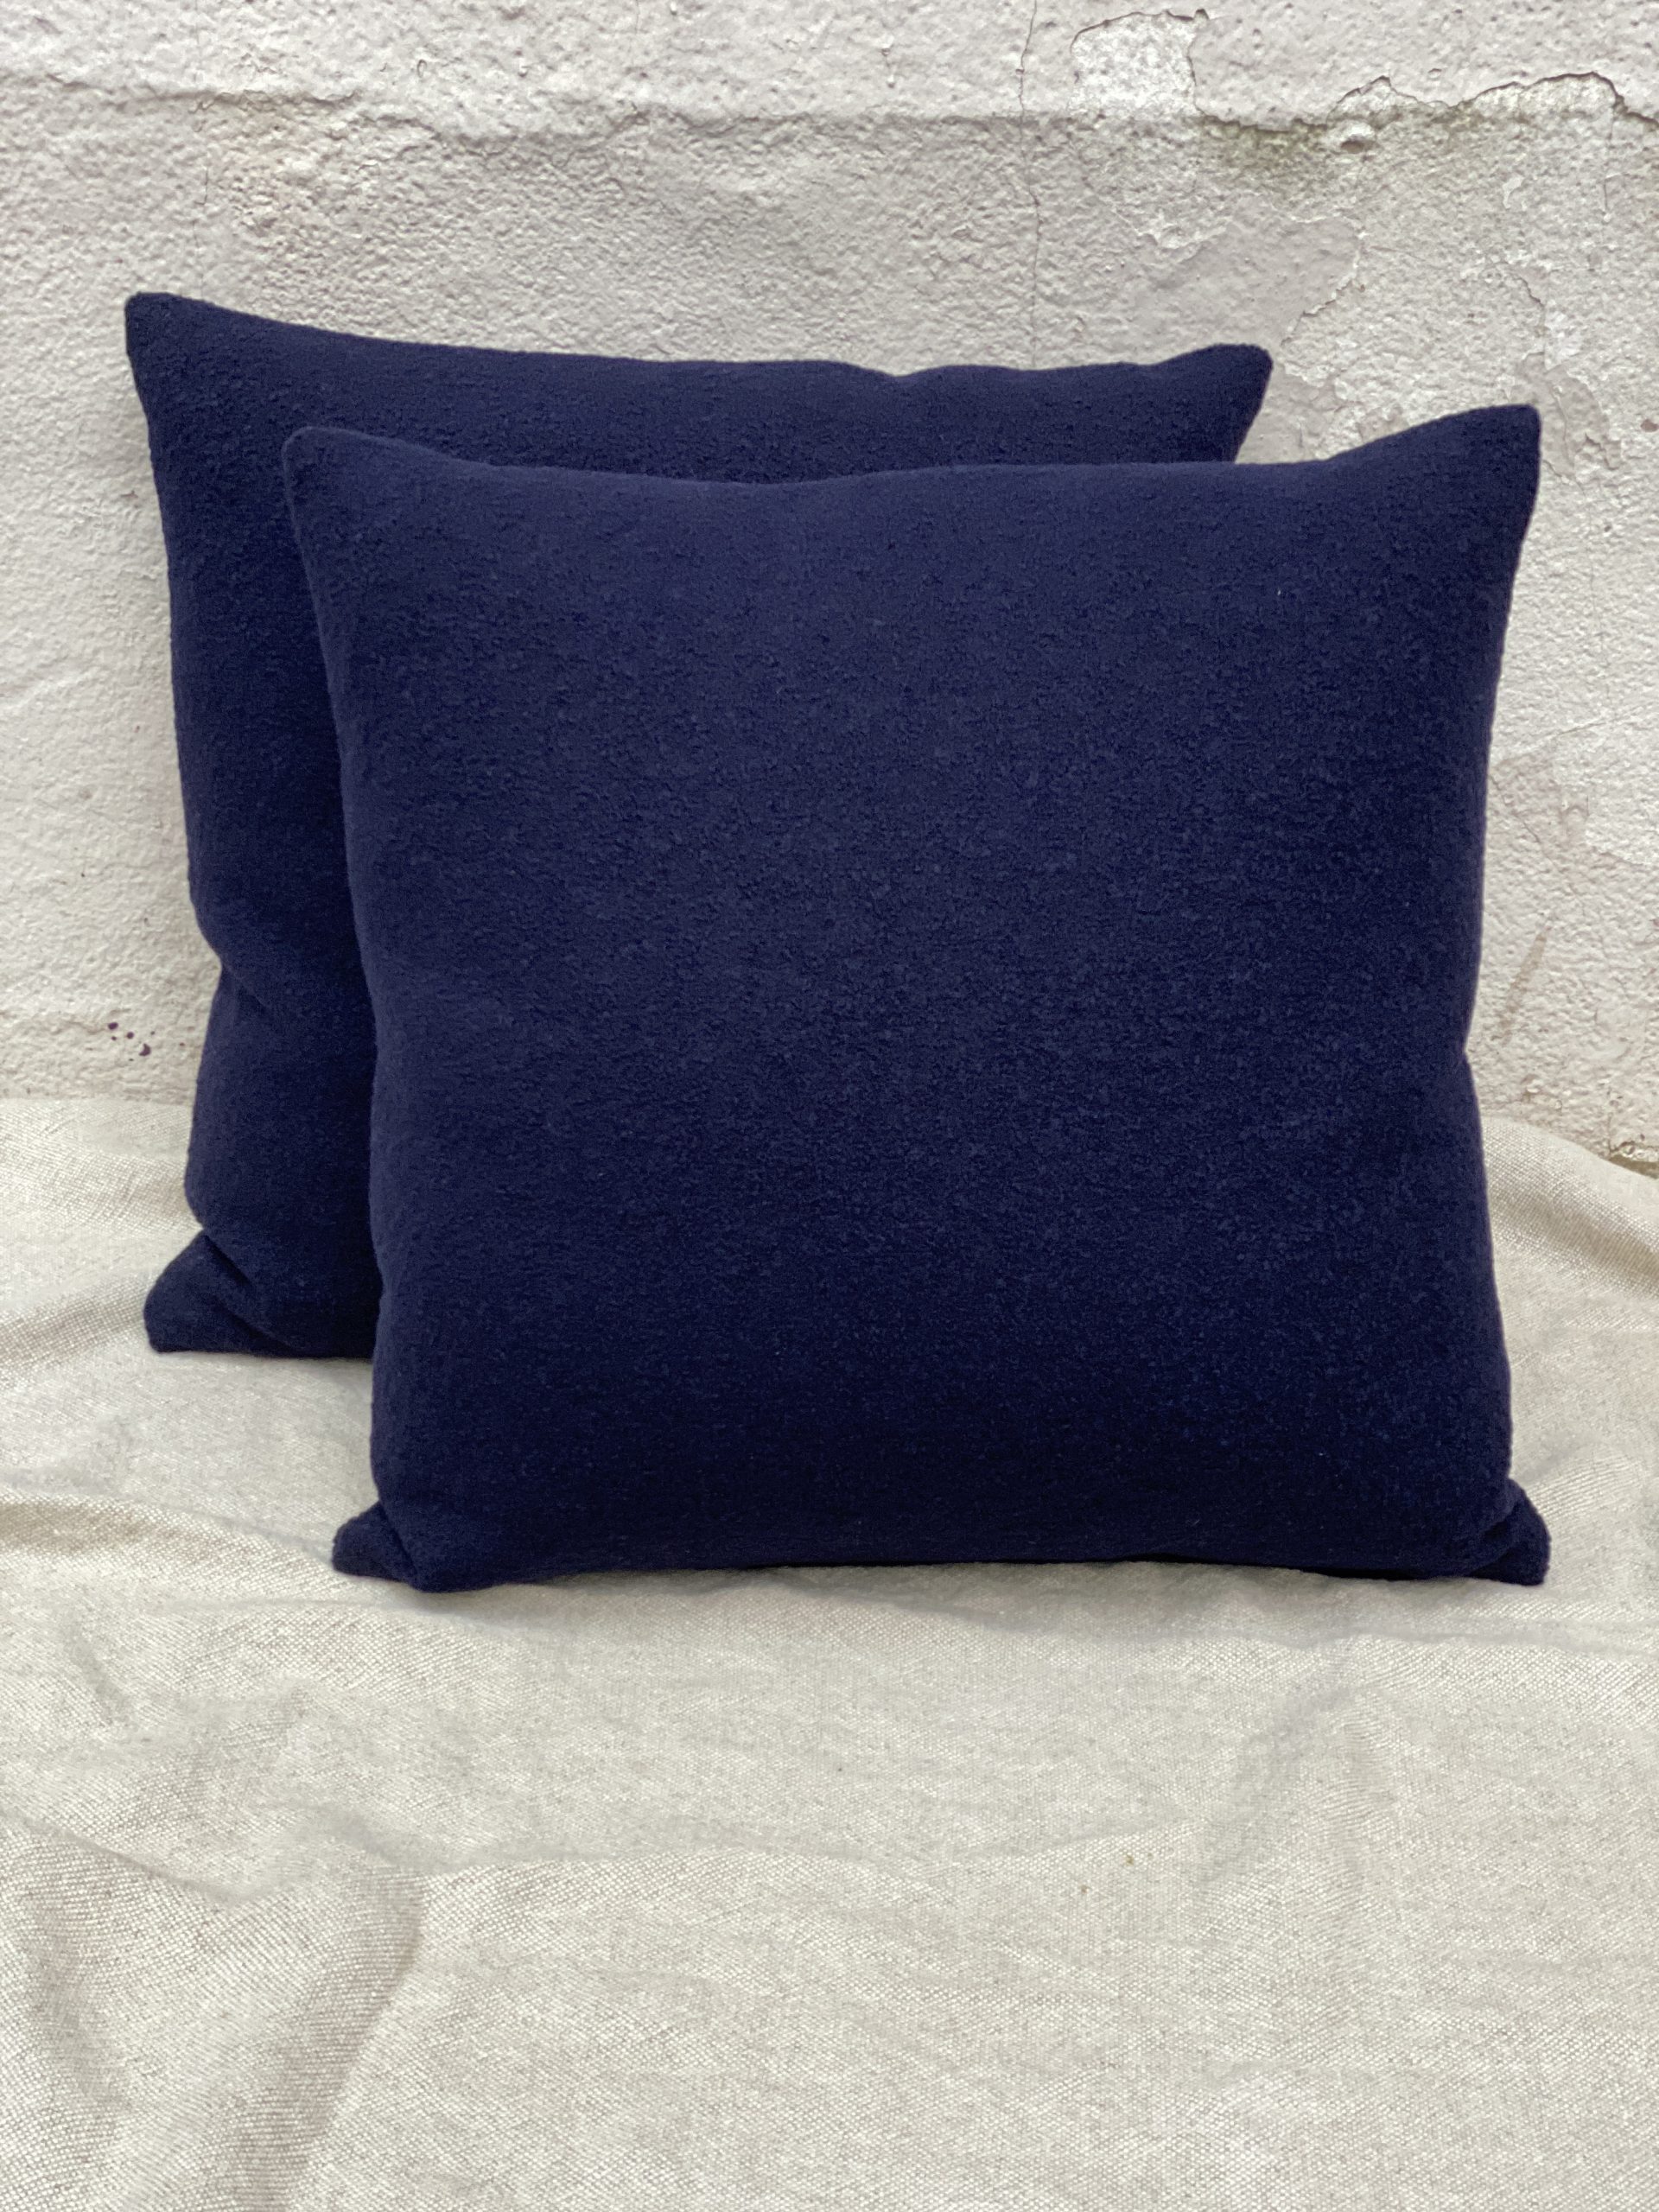 JLA Designs Wool Pillows